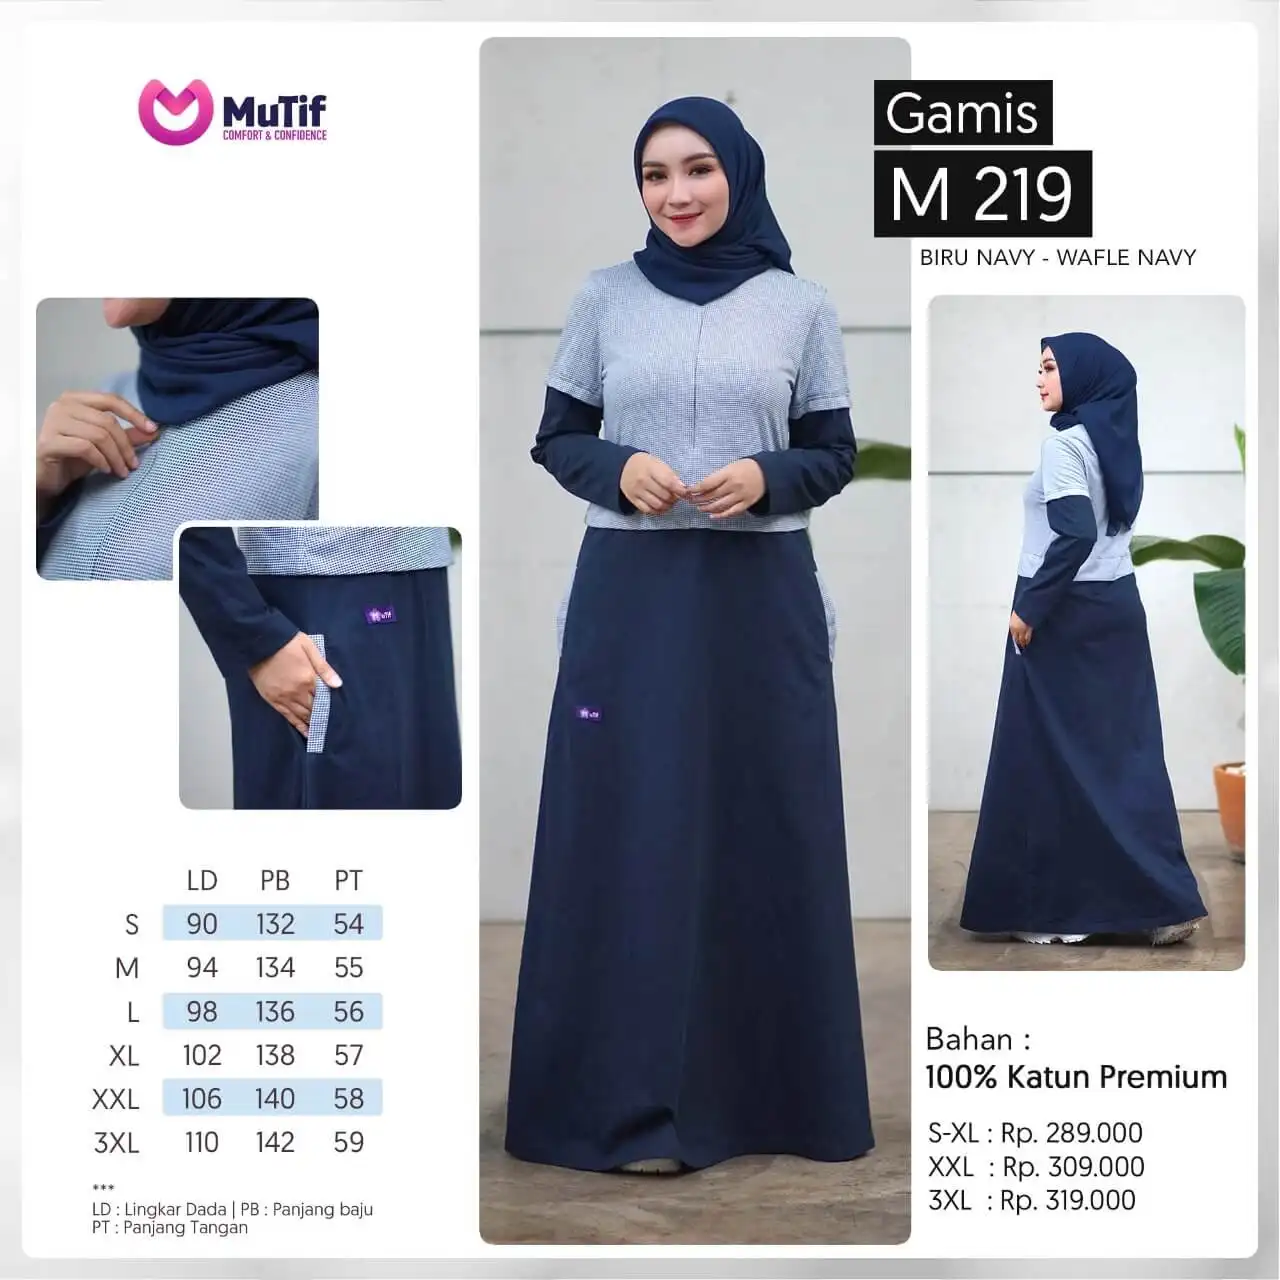 Baju Gamis Wanita Terbaru Dan Trendy 2020 Baju Wanita Mutif Mtif 219 A Biru Navy Wafle Navy Lazada Indonesia